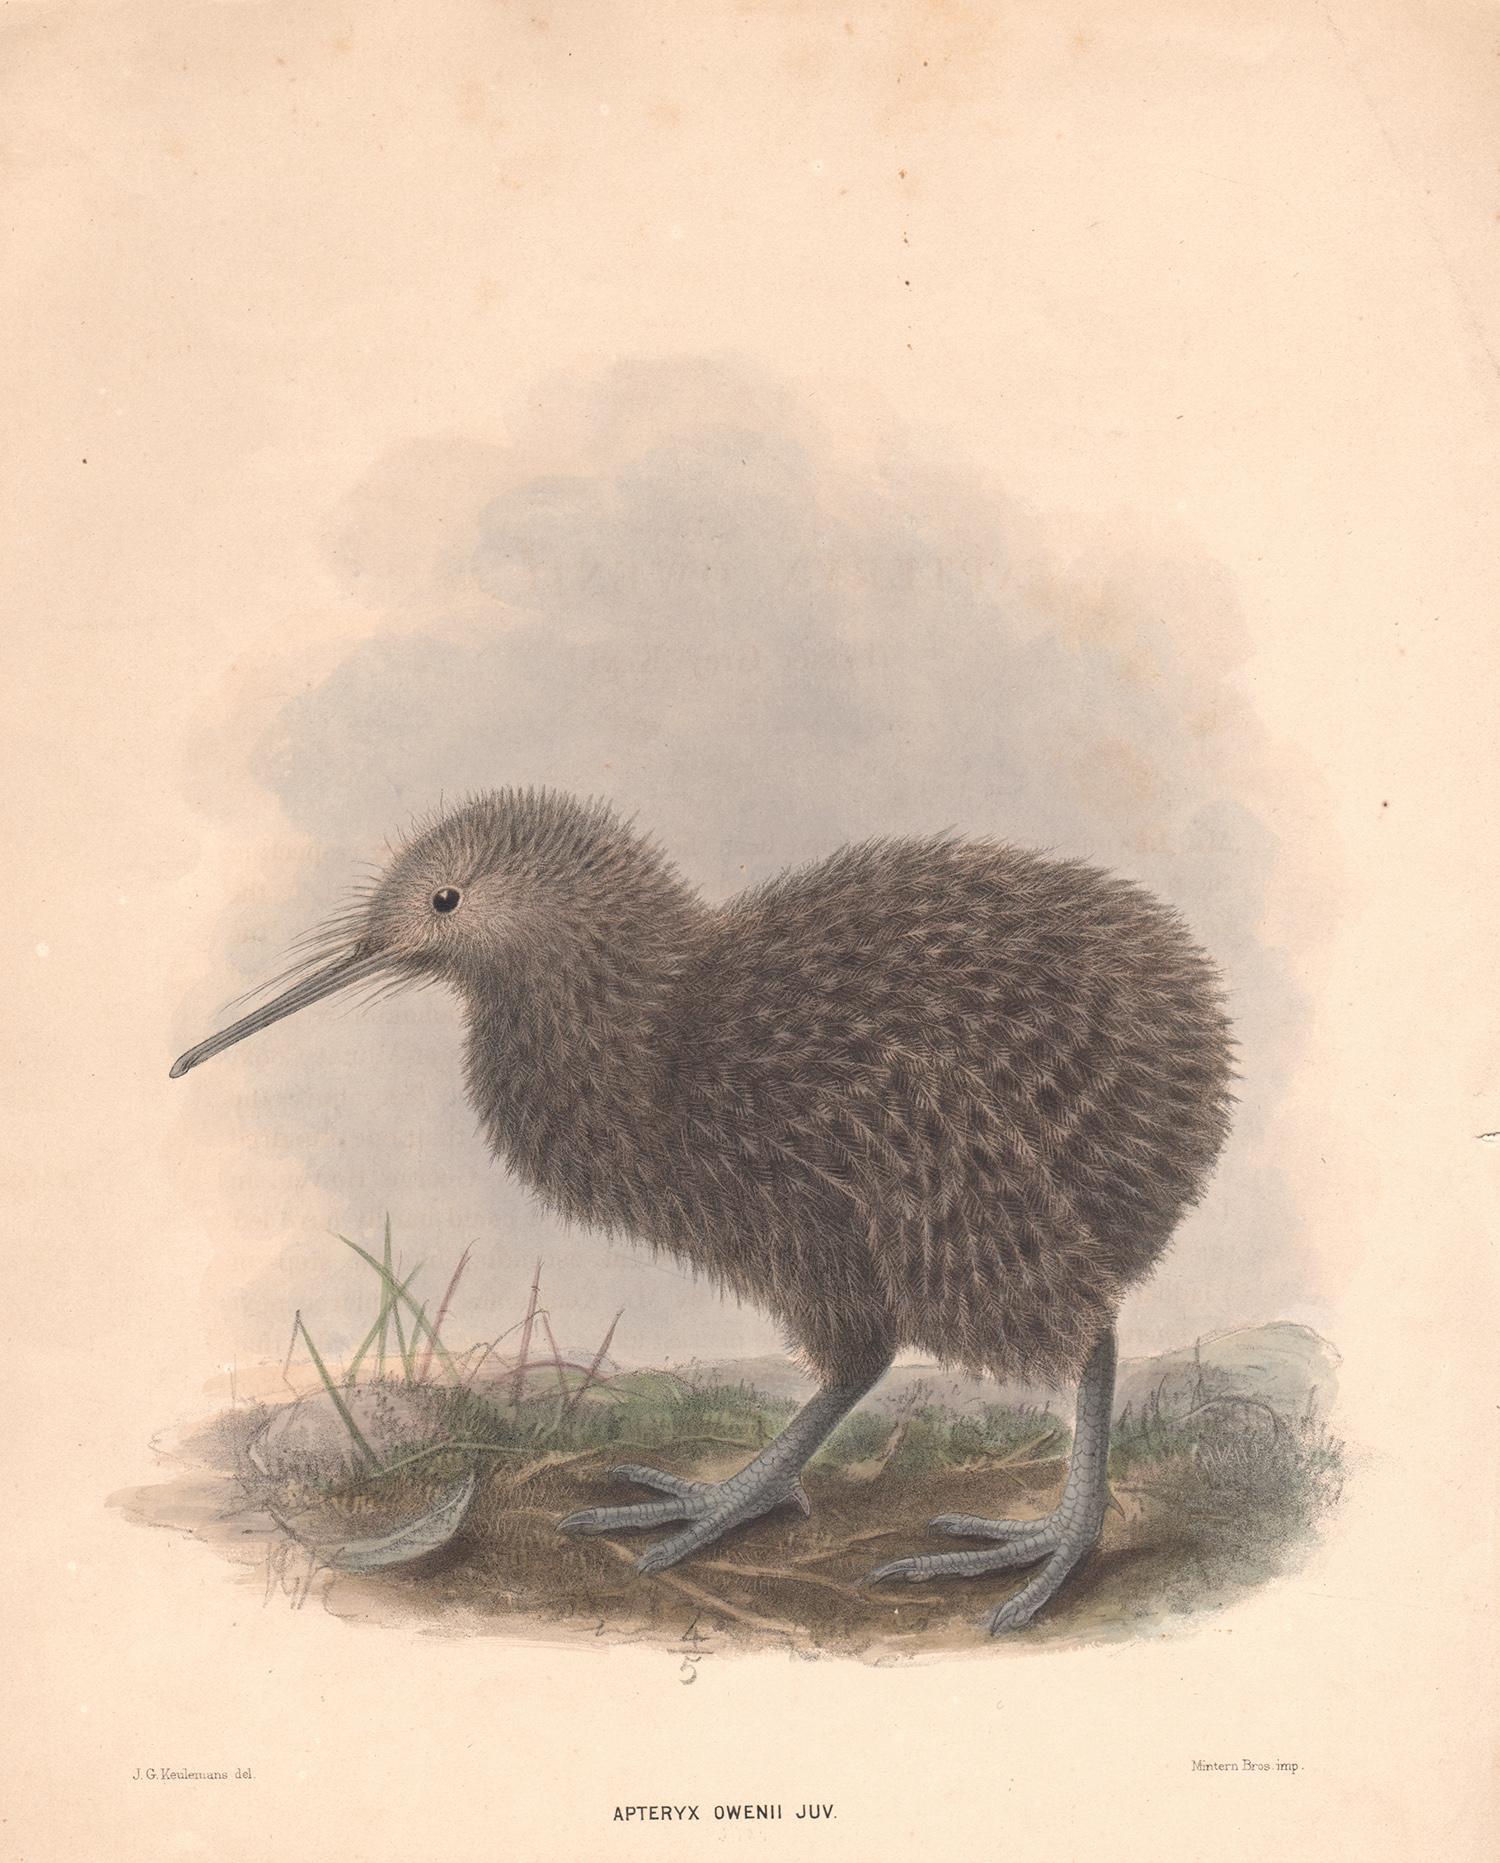 Johannes Gerardus Keulemans  Animal Print - Kiwi, Apteryx Owenii, New Zealand bird lithograph with hand-colouring, c1875